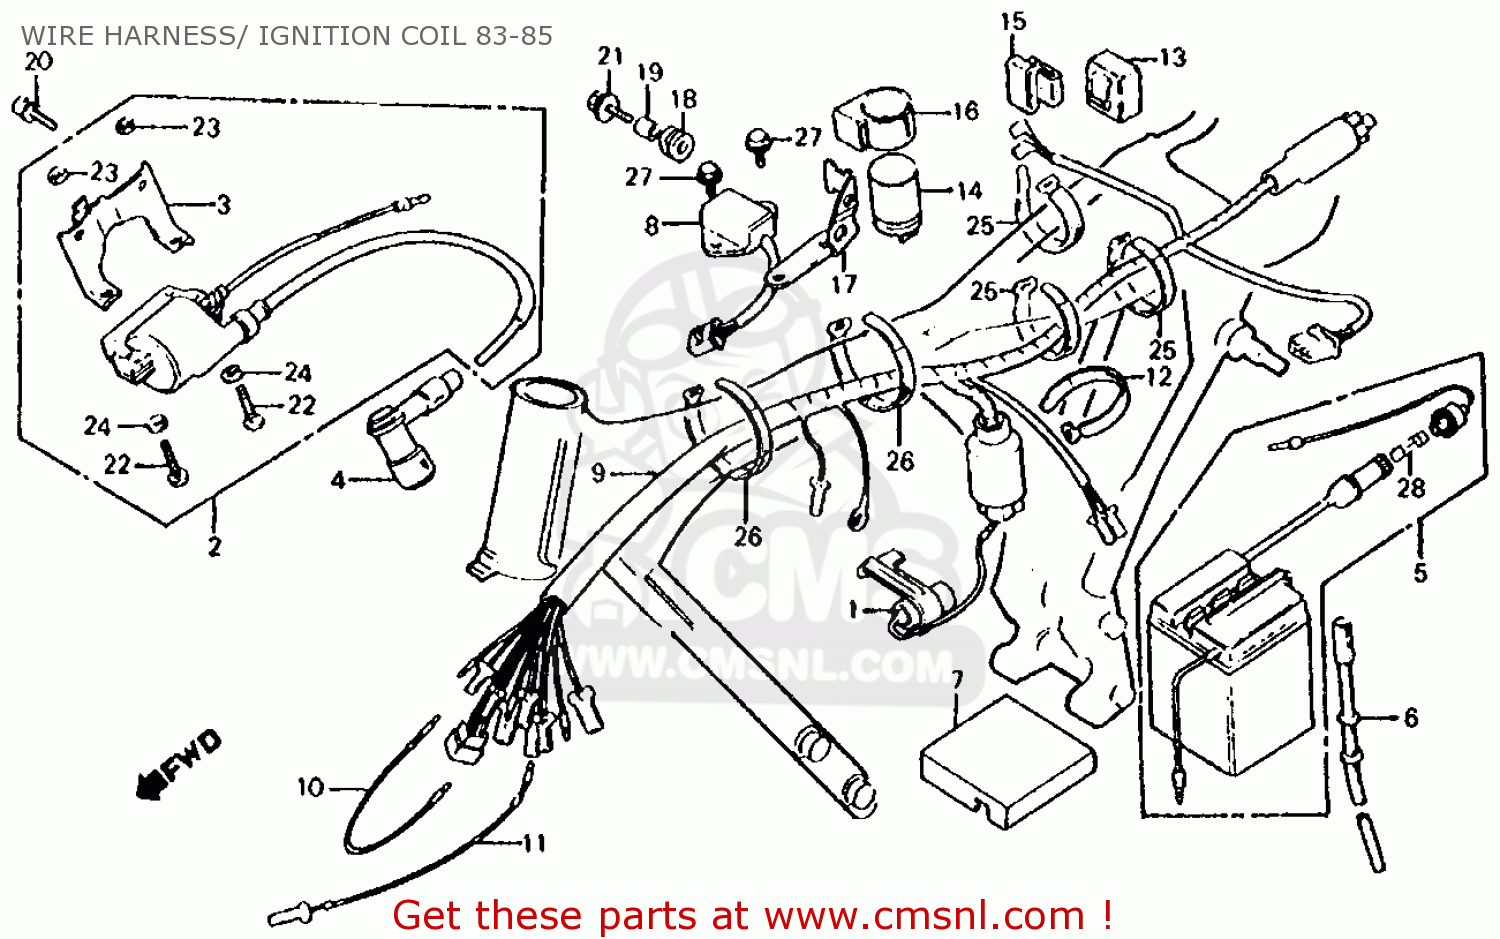 1982 Honda Xl 100 Wiring Diagram - Wiring Diagram